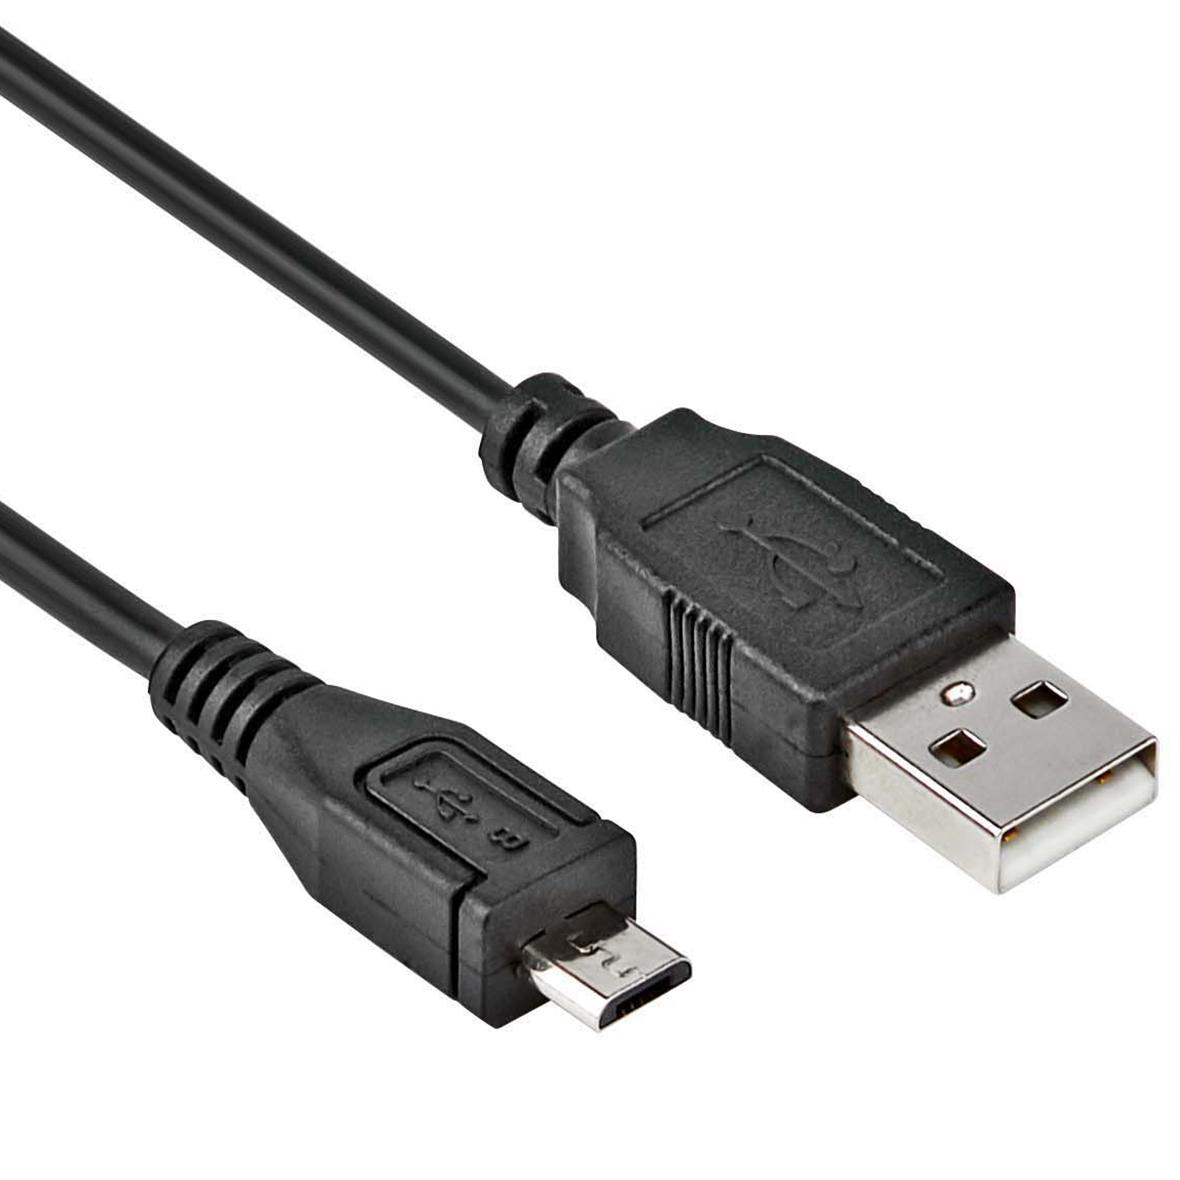 Samsung Galaxy J7 - USB Kabel - Allteq